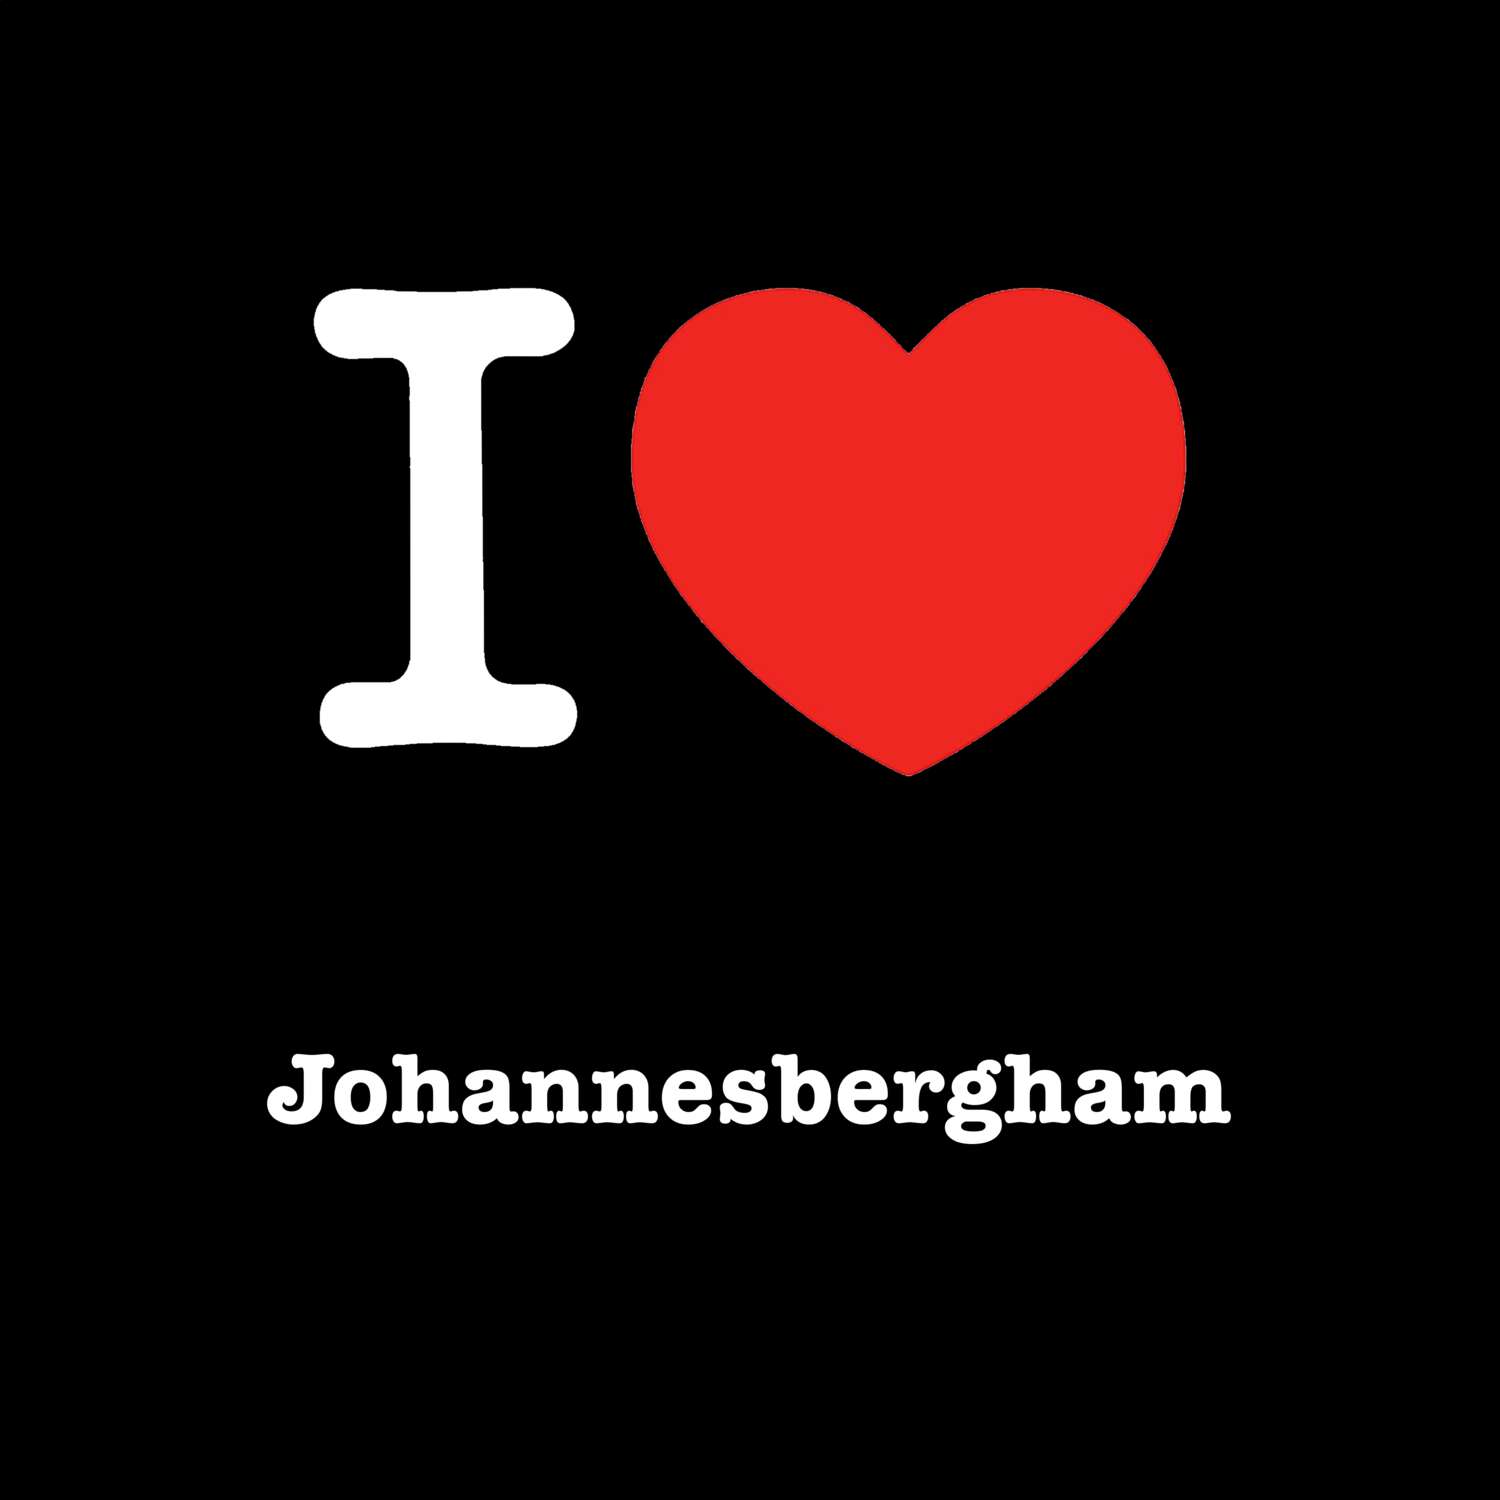 Johannesbergham T-Shirt »I love«